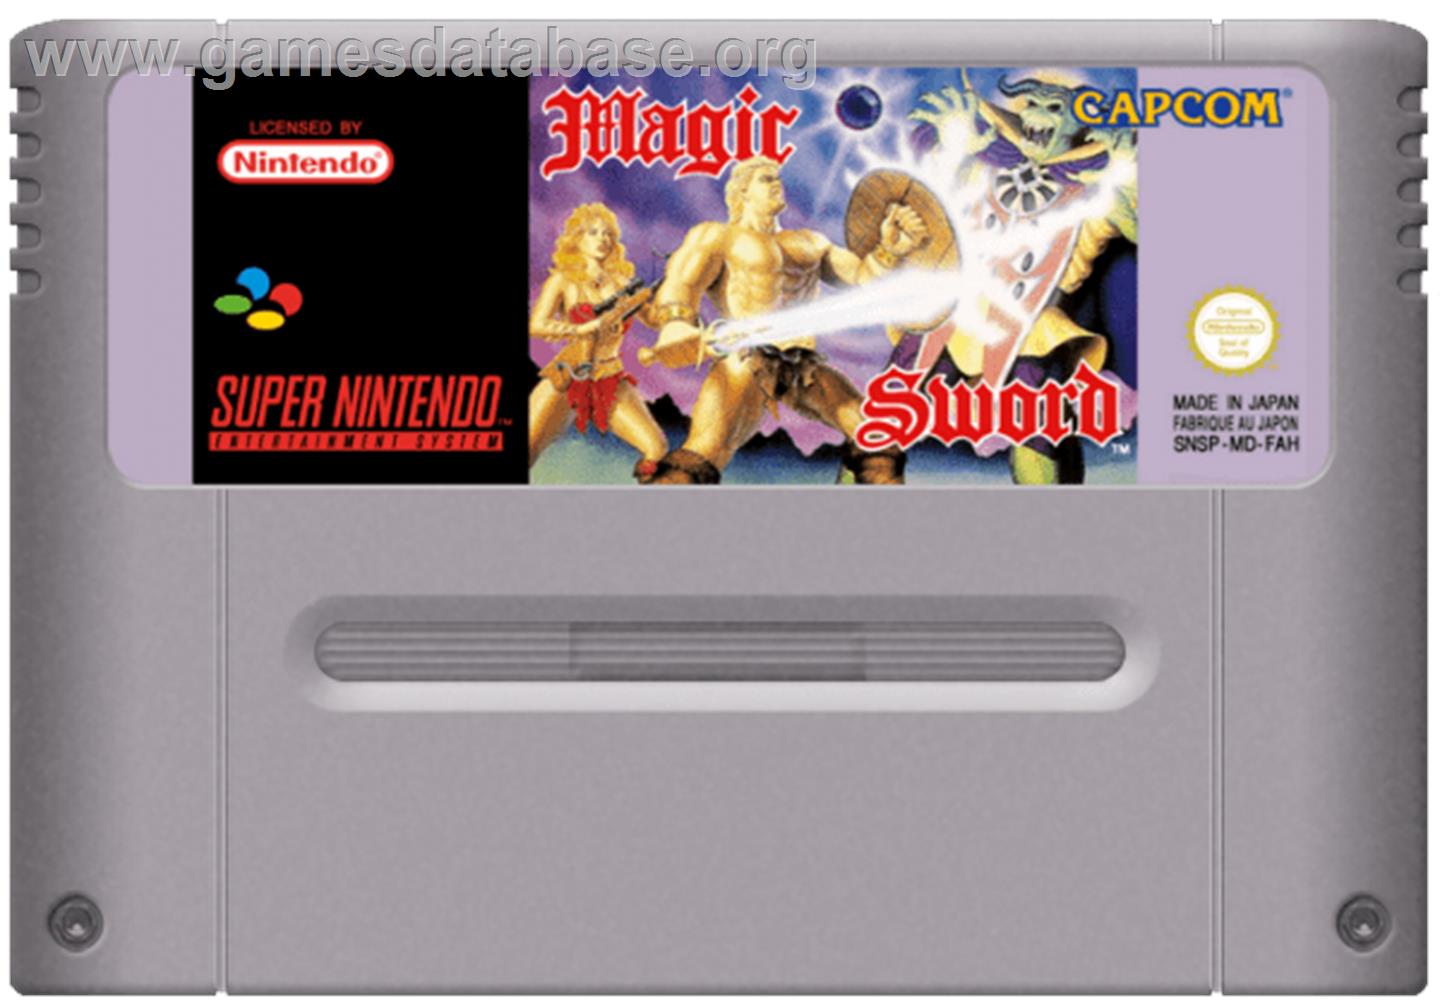 Magic Sword - Nintendo SNES - Artwork - Cartridge